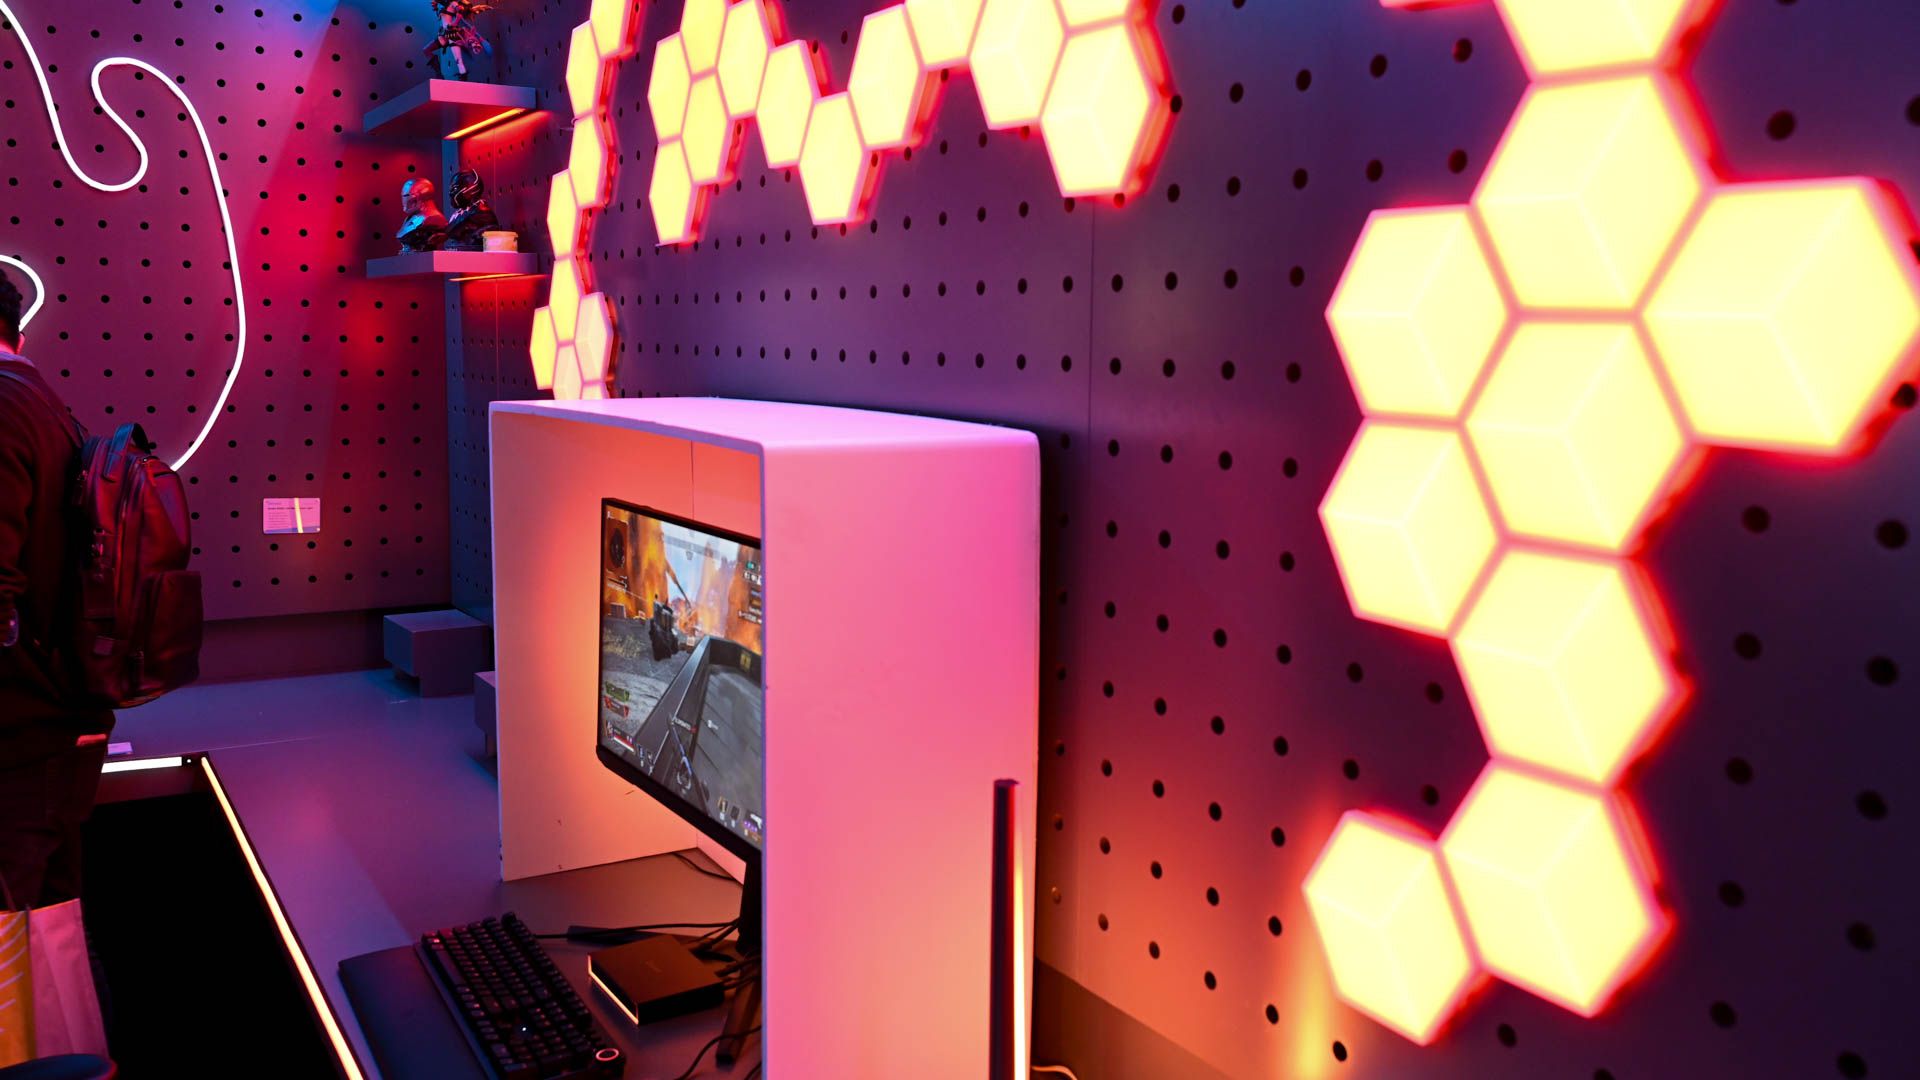 Govee wall lights behind a gaming computer